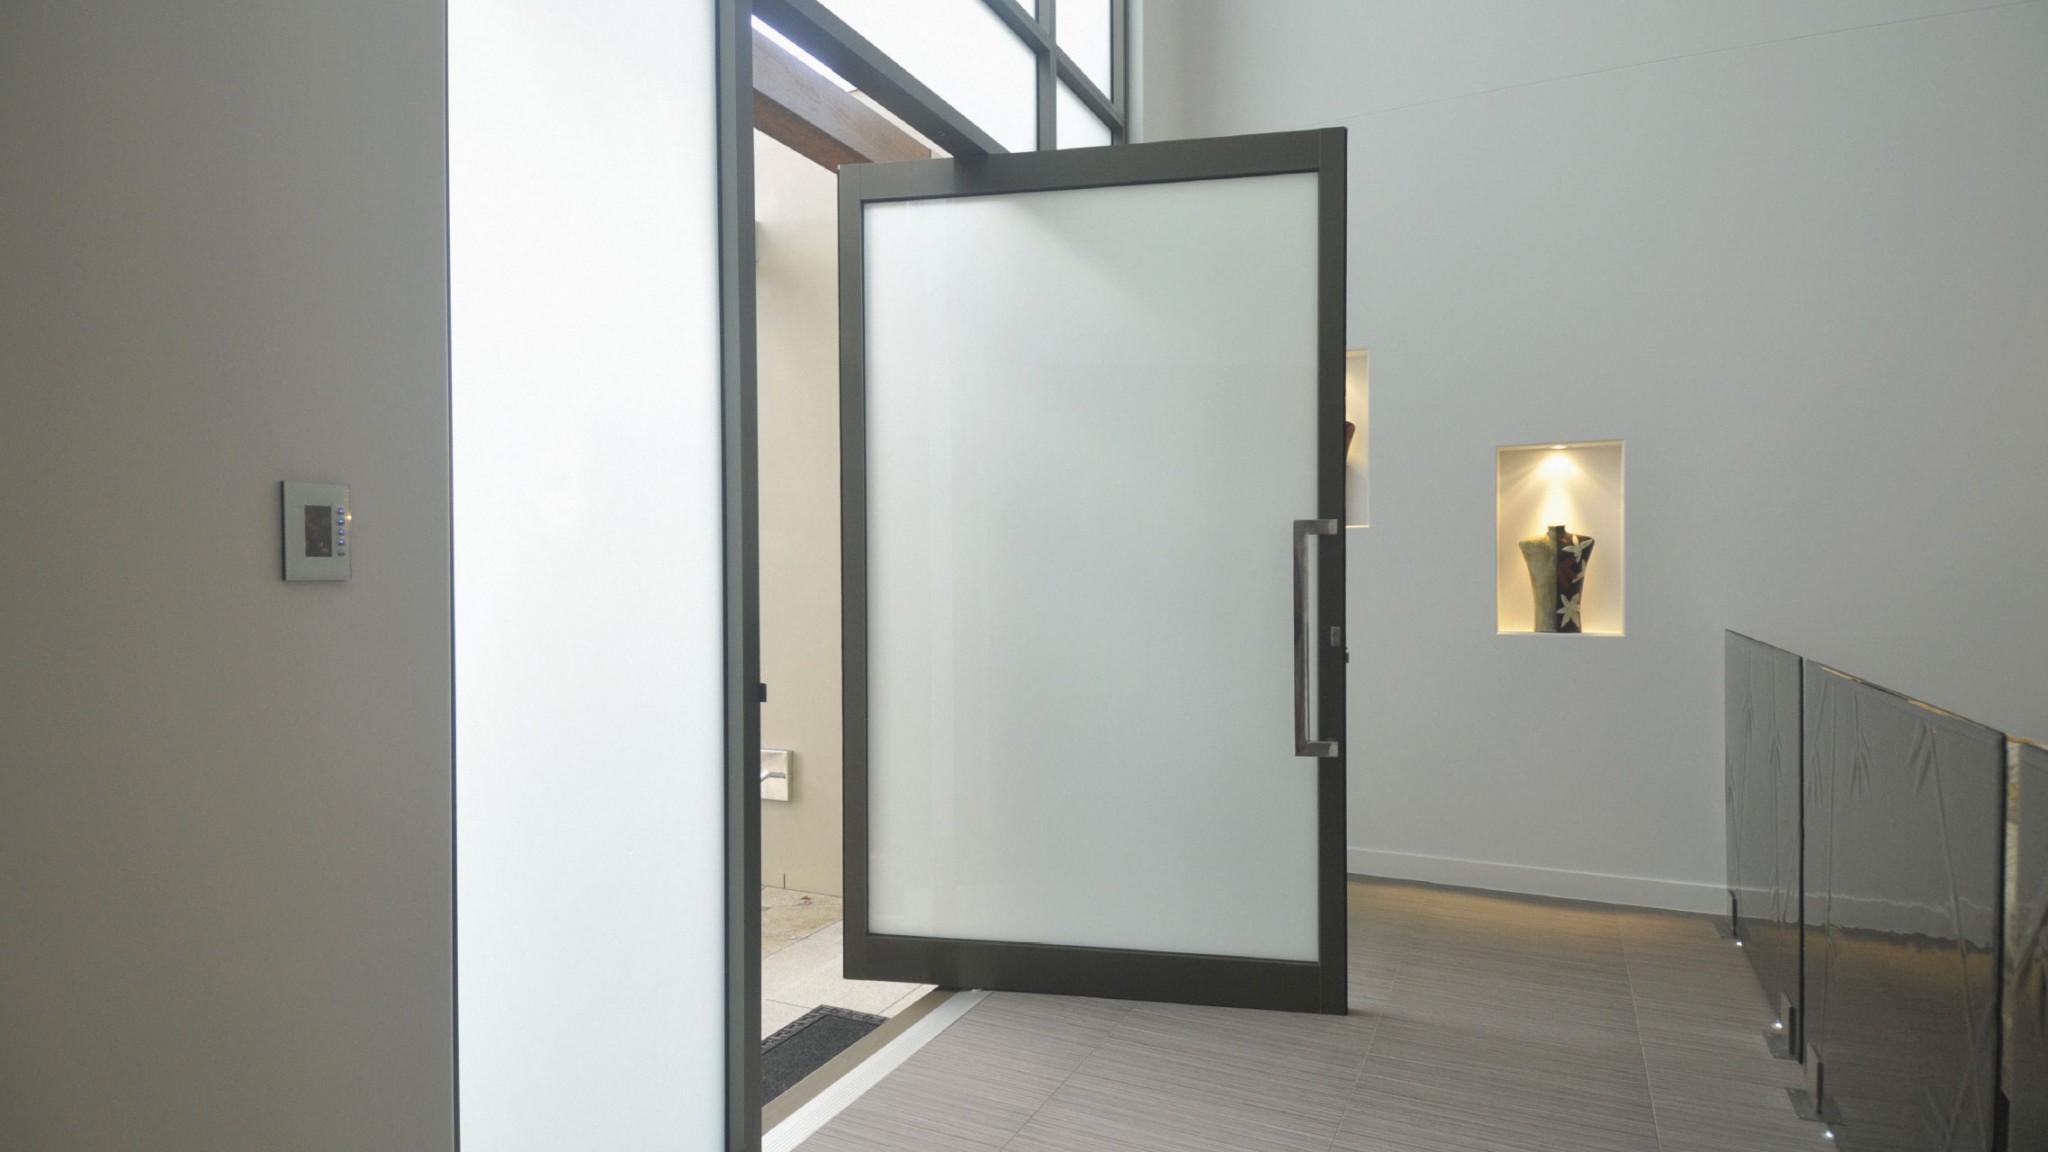 Black Aluminium Pivot Door With Obscure Glass 1 1024x576@2x 